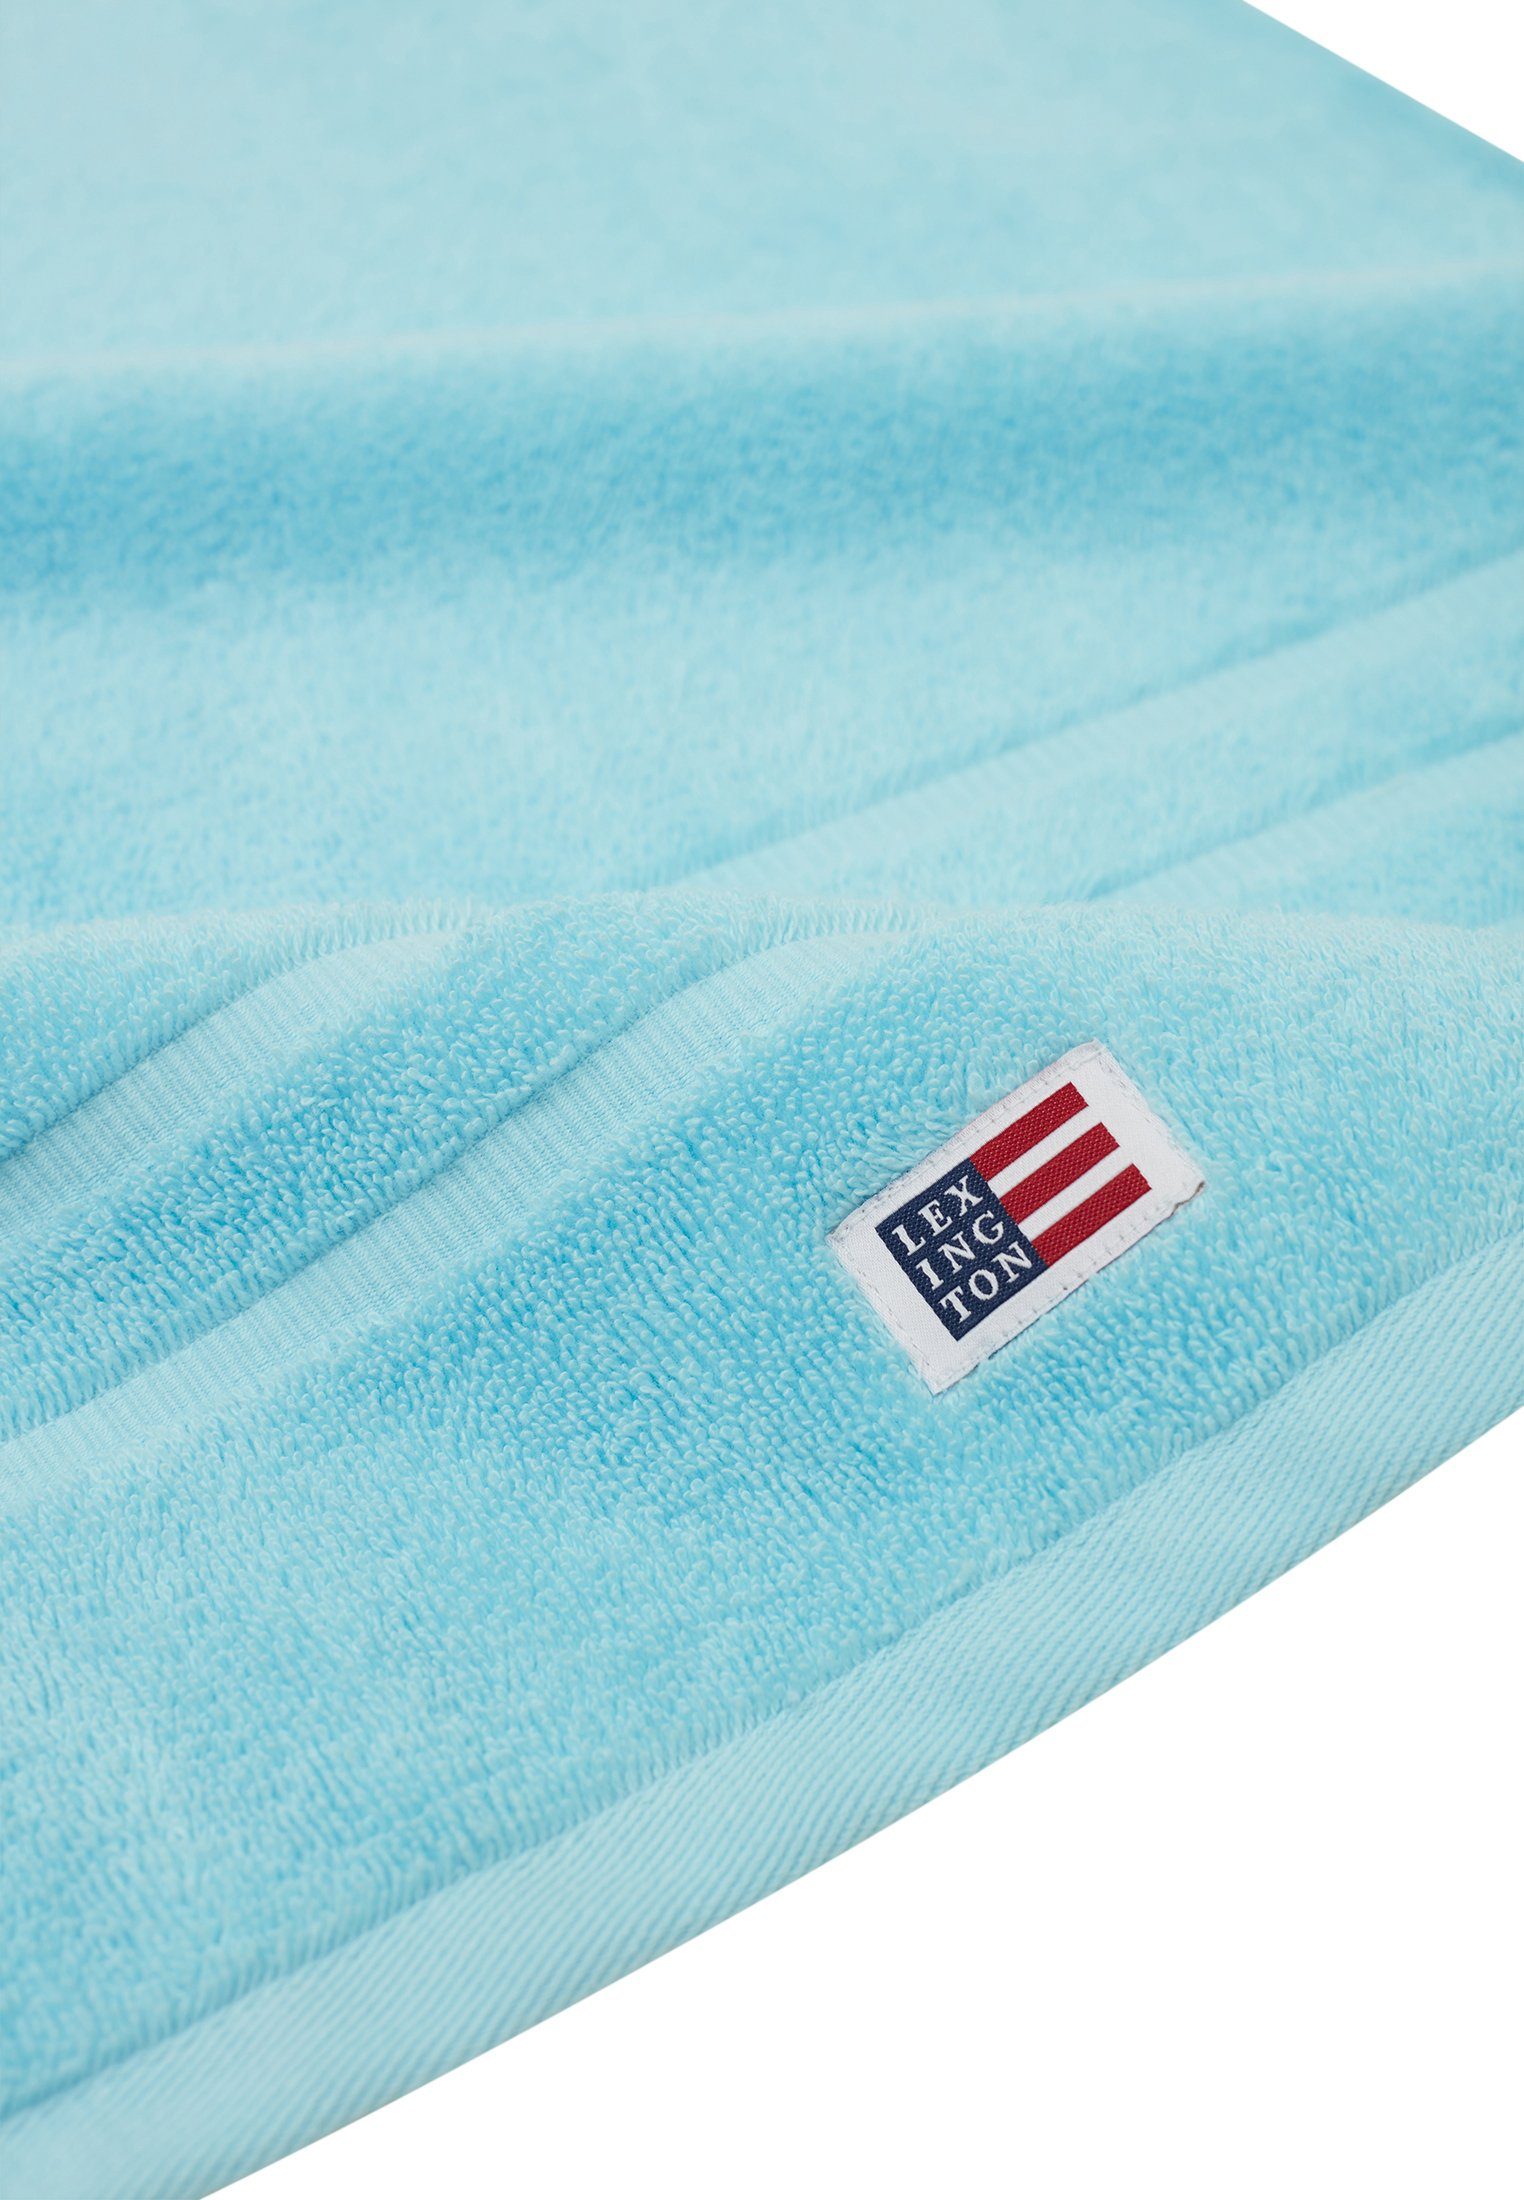 Lexington Handtuch Towel turquoise Original